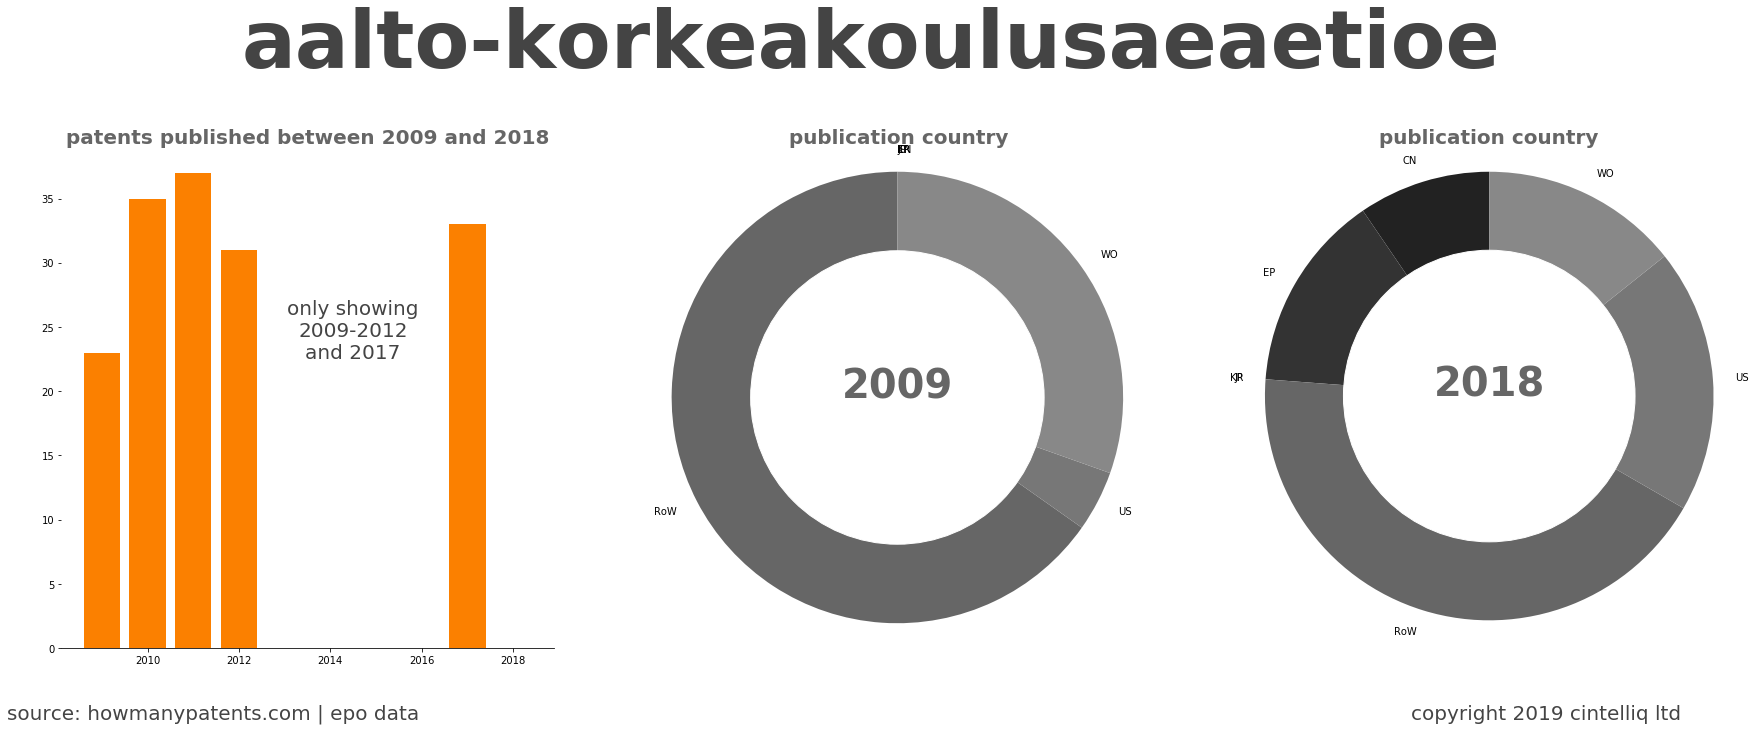 summary of patents for Aalto-Korkeakoulusaeaetioe